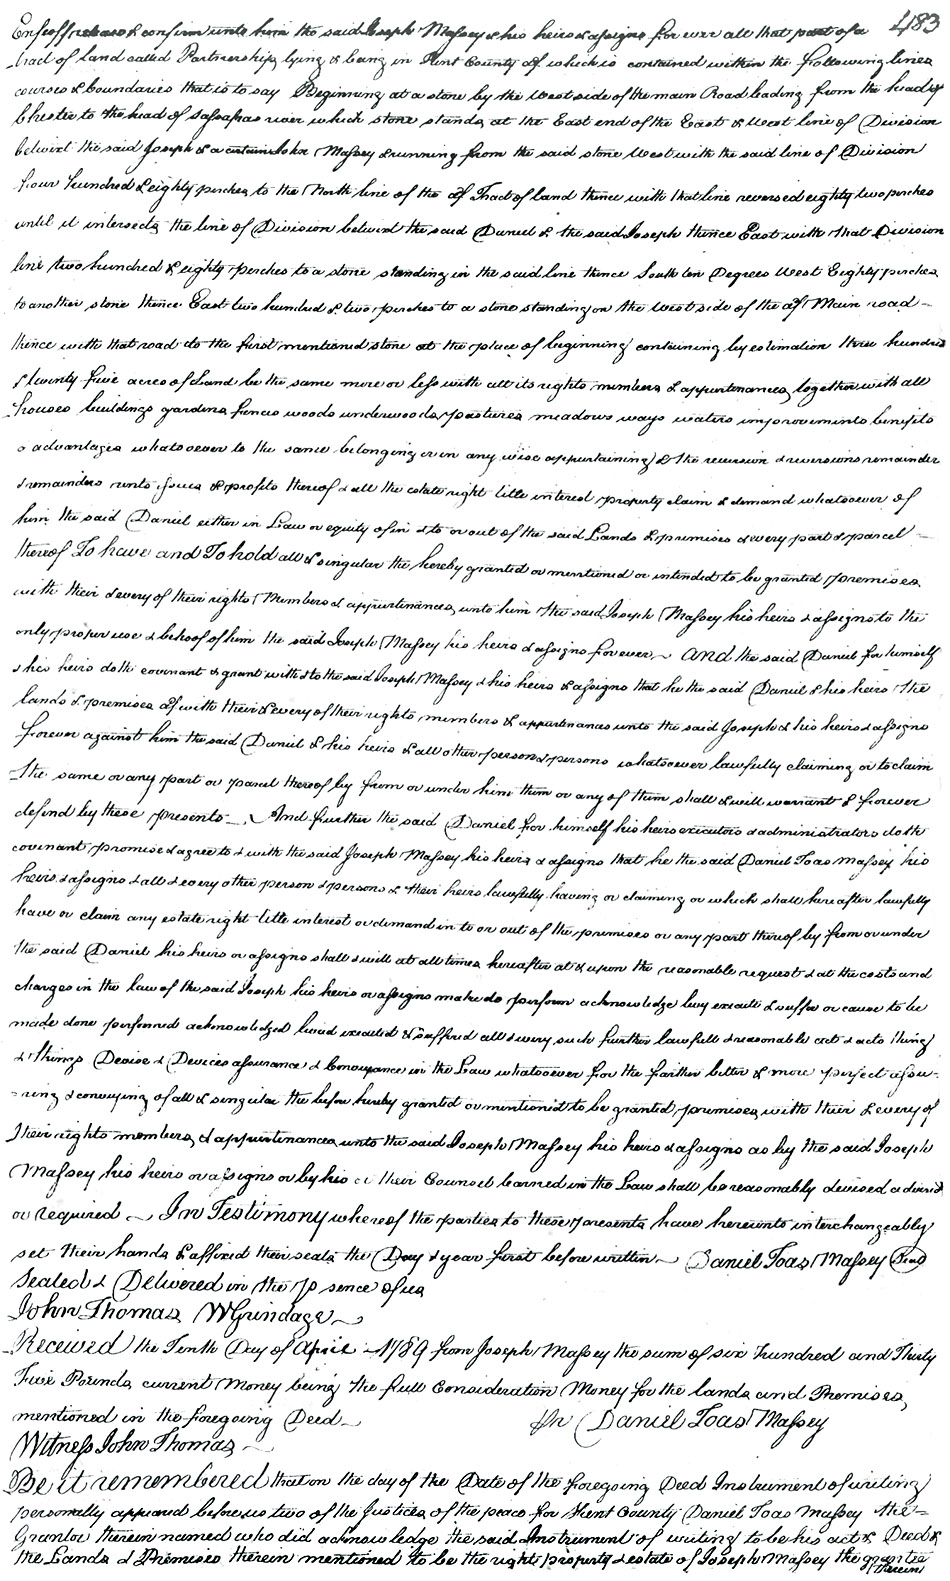 Maryland Land Records, Kent County, Daniel Toas Massey to Joseph Massy, September 4, 1789